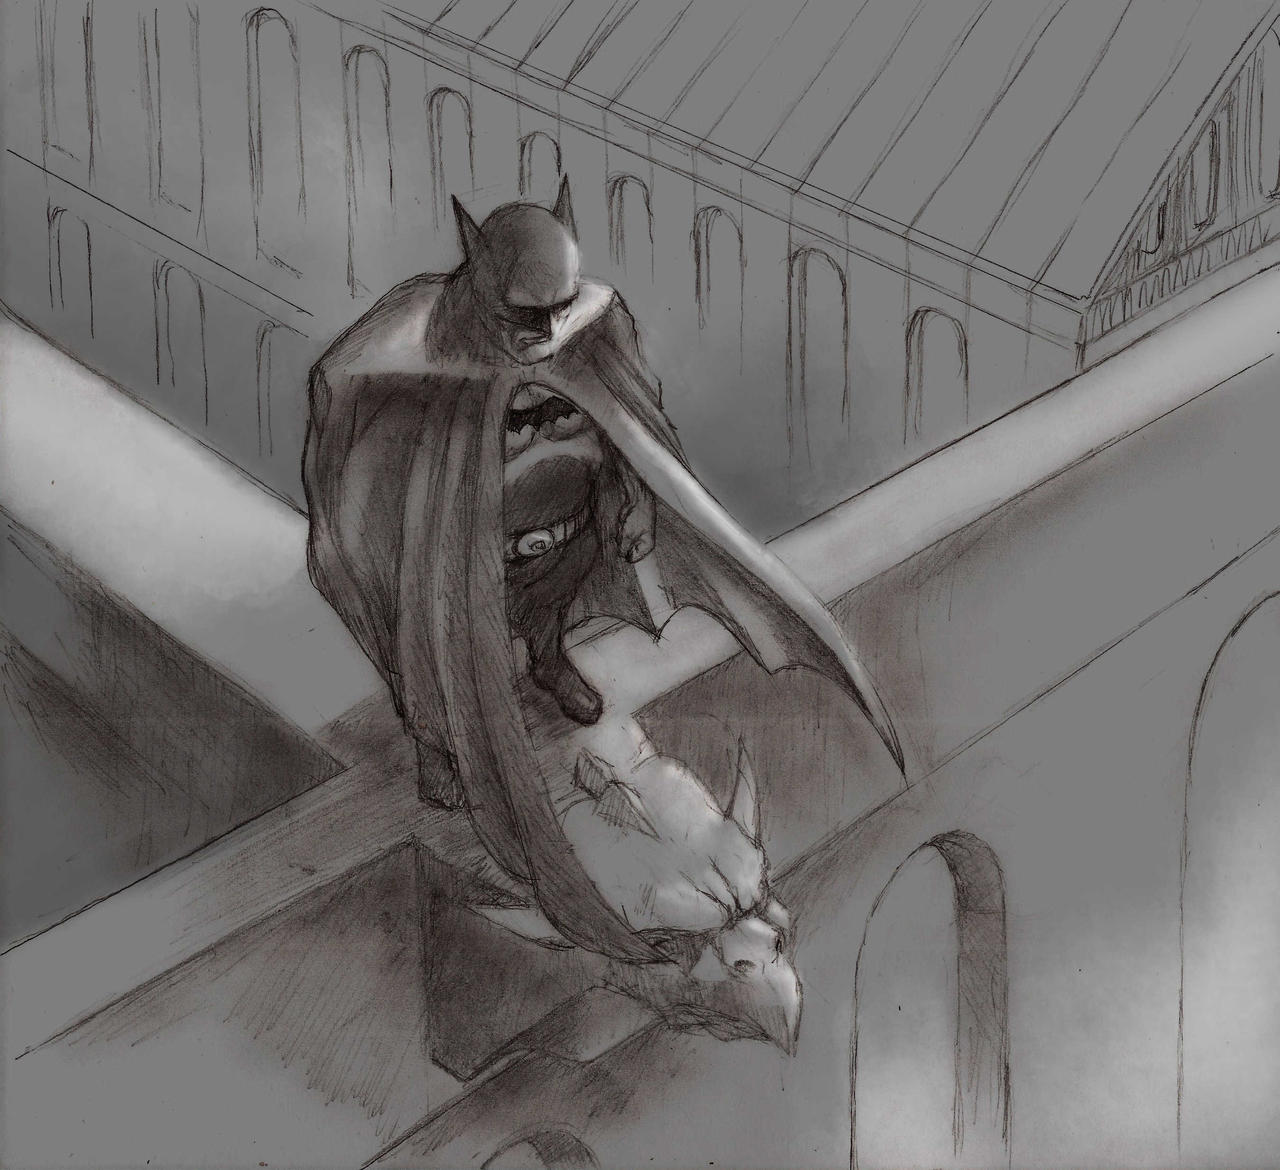 Batman Gothic by Nick-Perks on DeviantArt